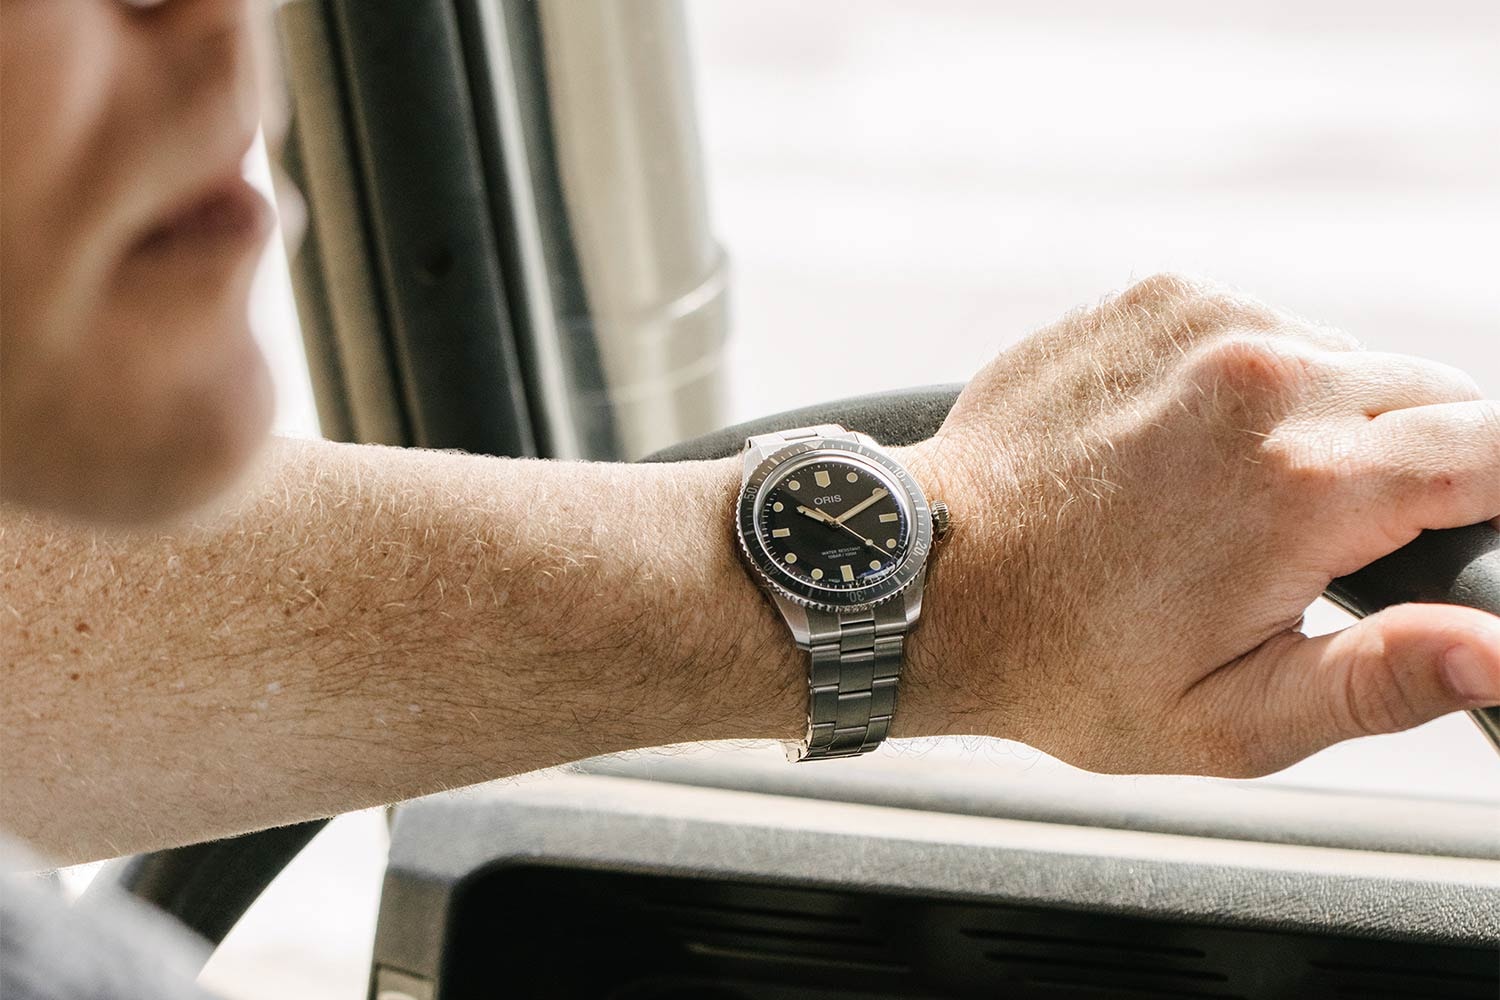 Hodinkee x Oris Divers Sixty Five Watch swiss made watches timepiece diving ETA 